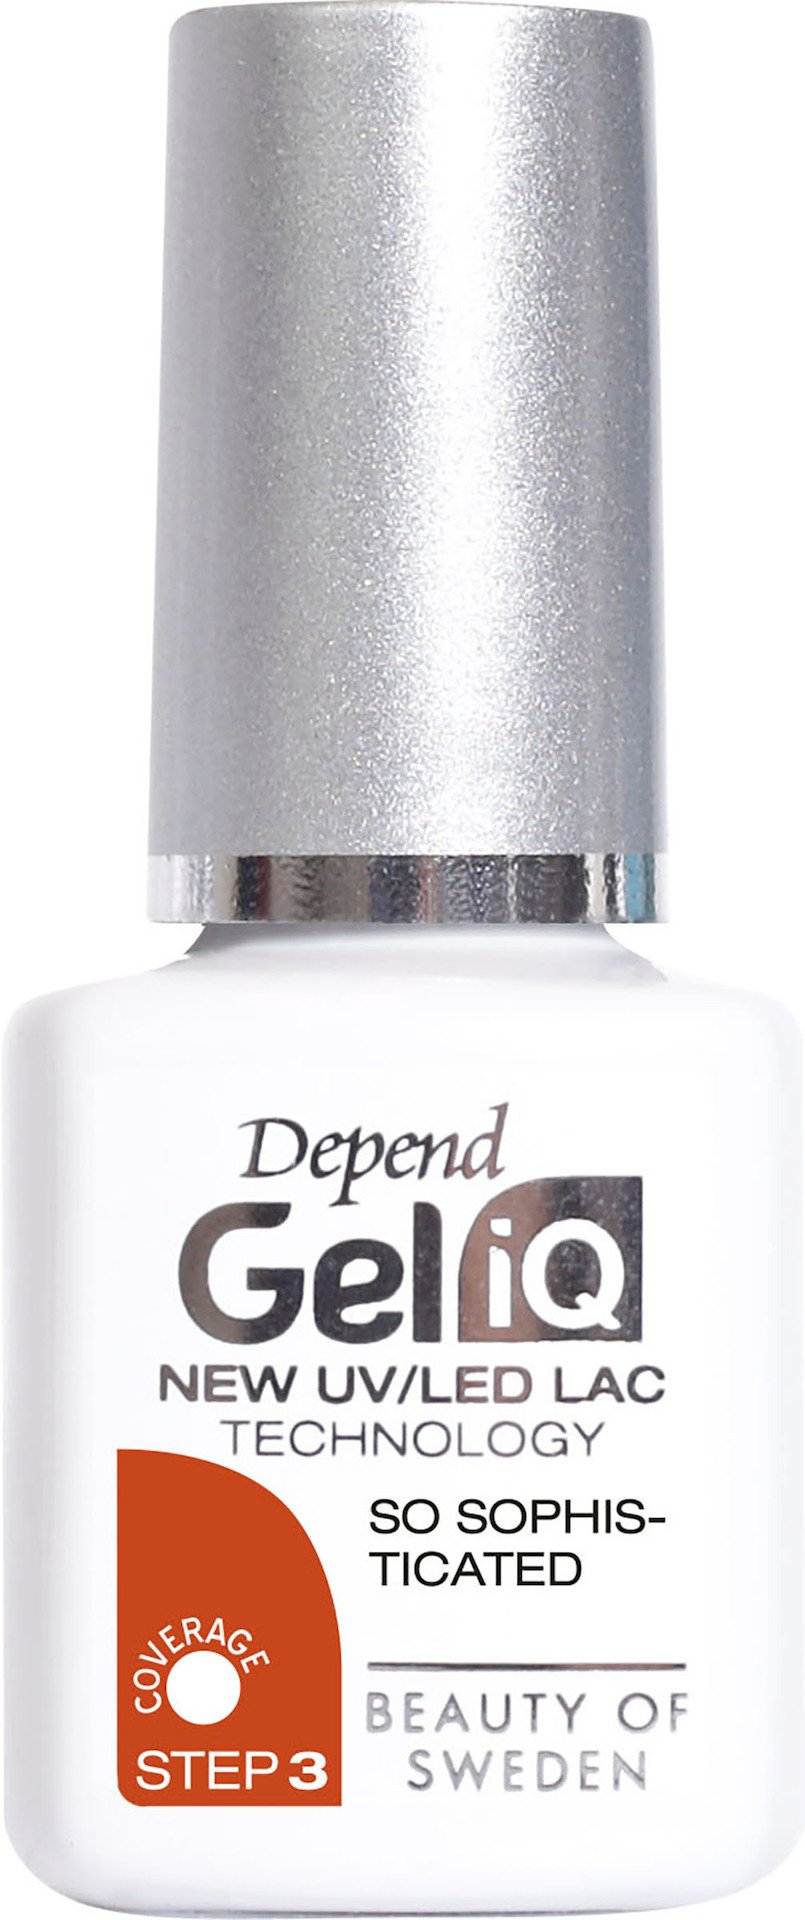 Depend Gel iQ So Sophisticated 5 ml